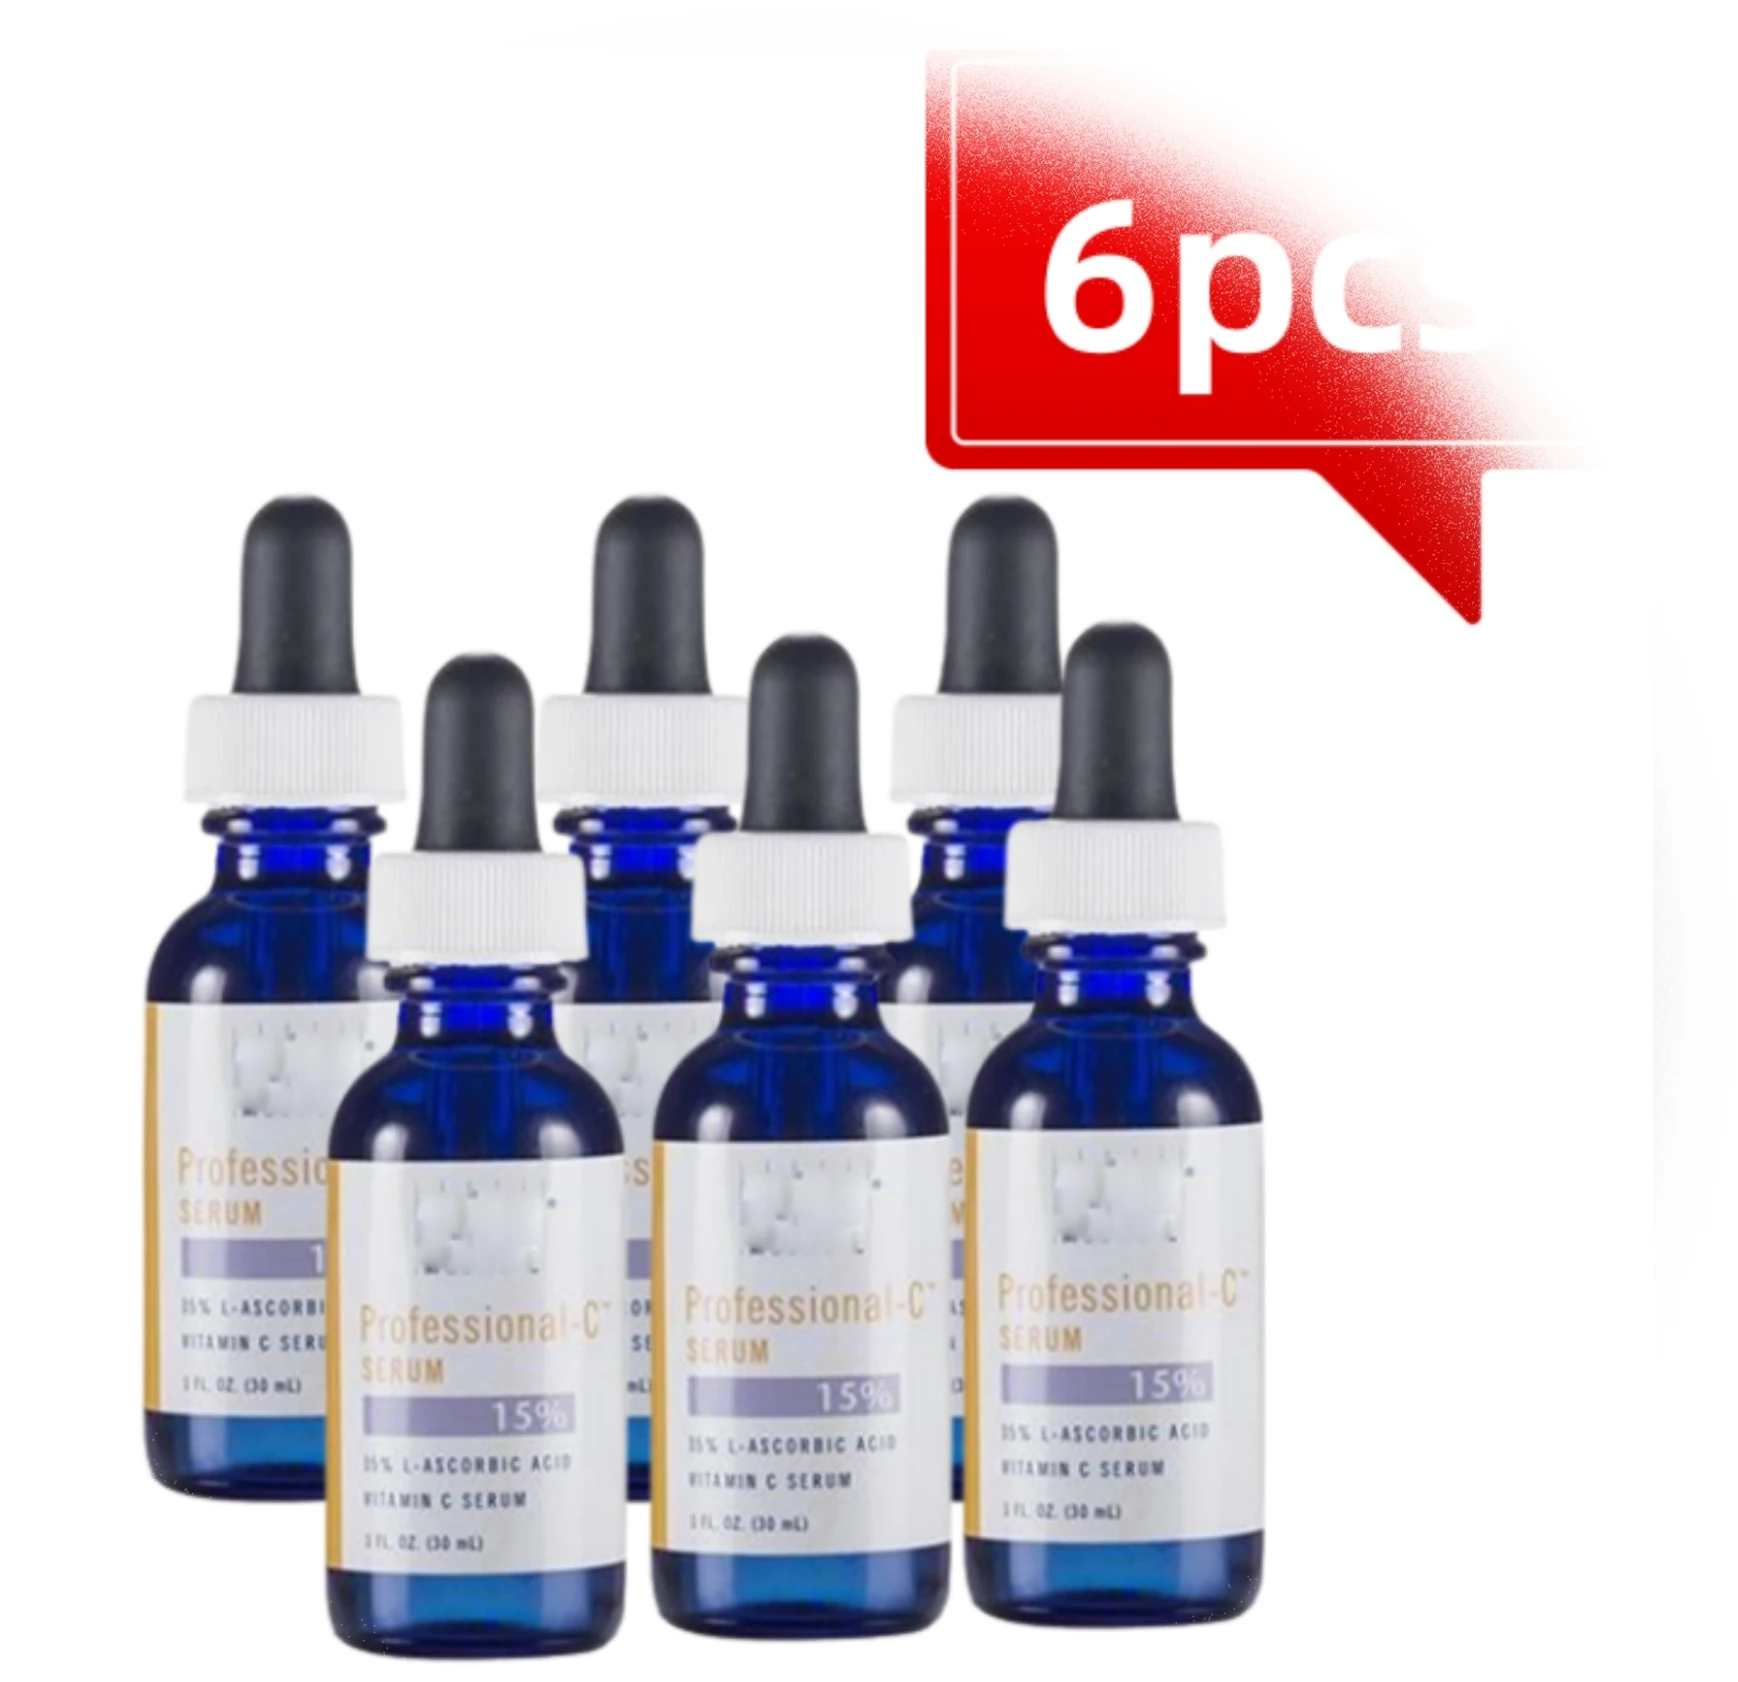 

6pcs OBAGI Facial Serum Professional-C Antioxidant Vitamin C 20/15% Whitening Anti-oxidation Brighten Skin Care Anti-aging 30ml